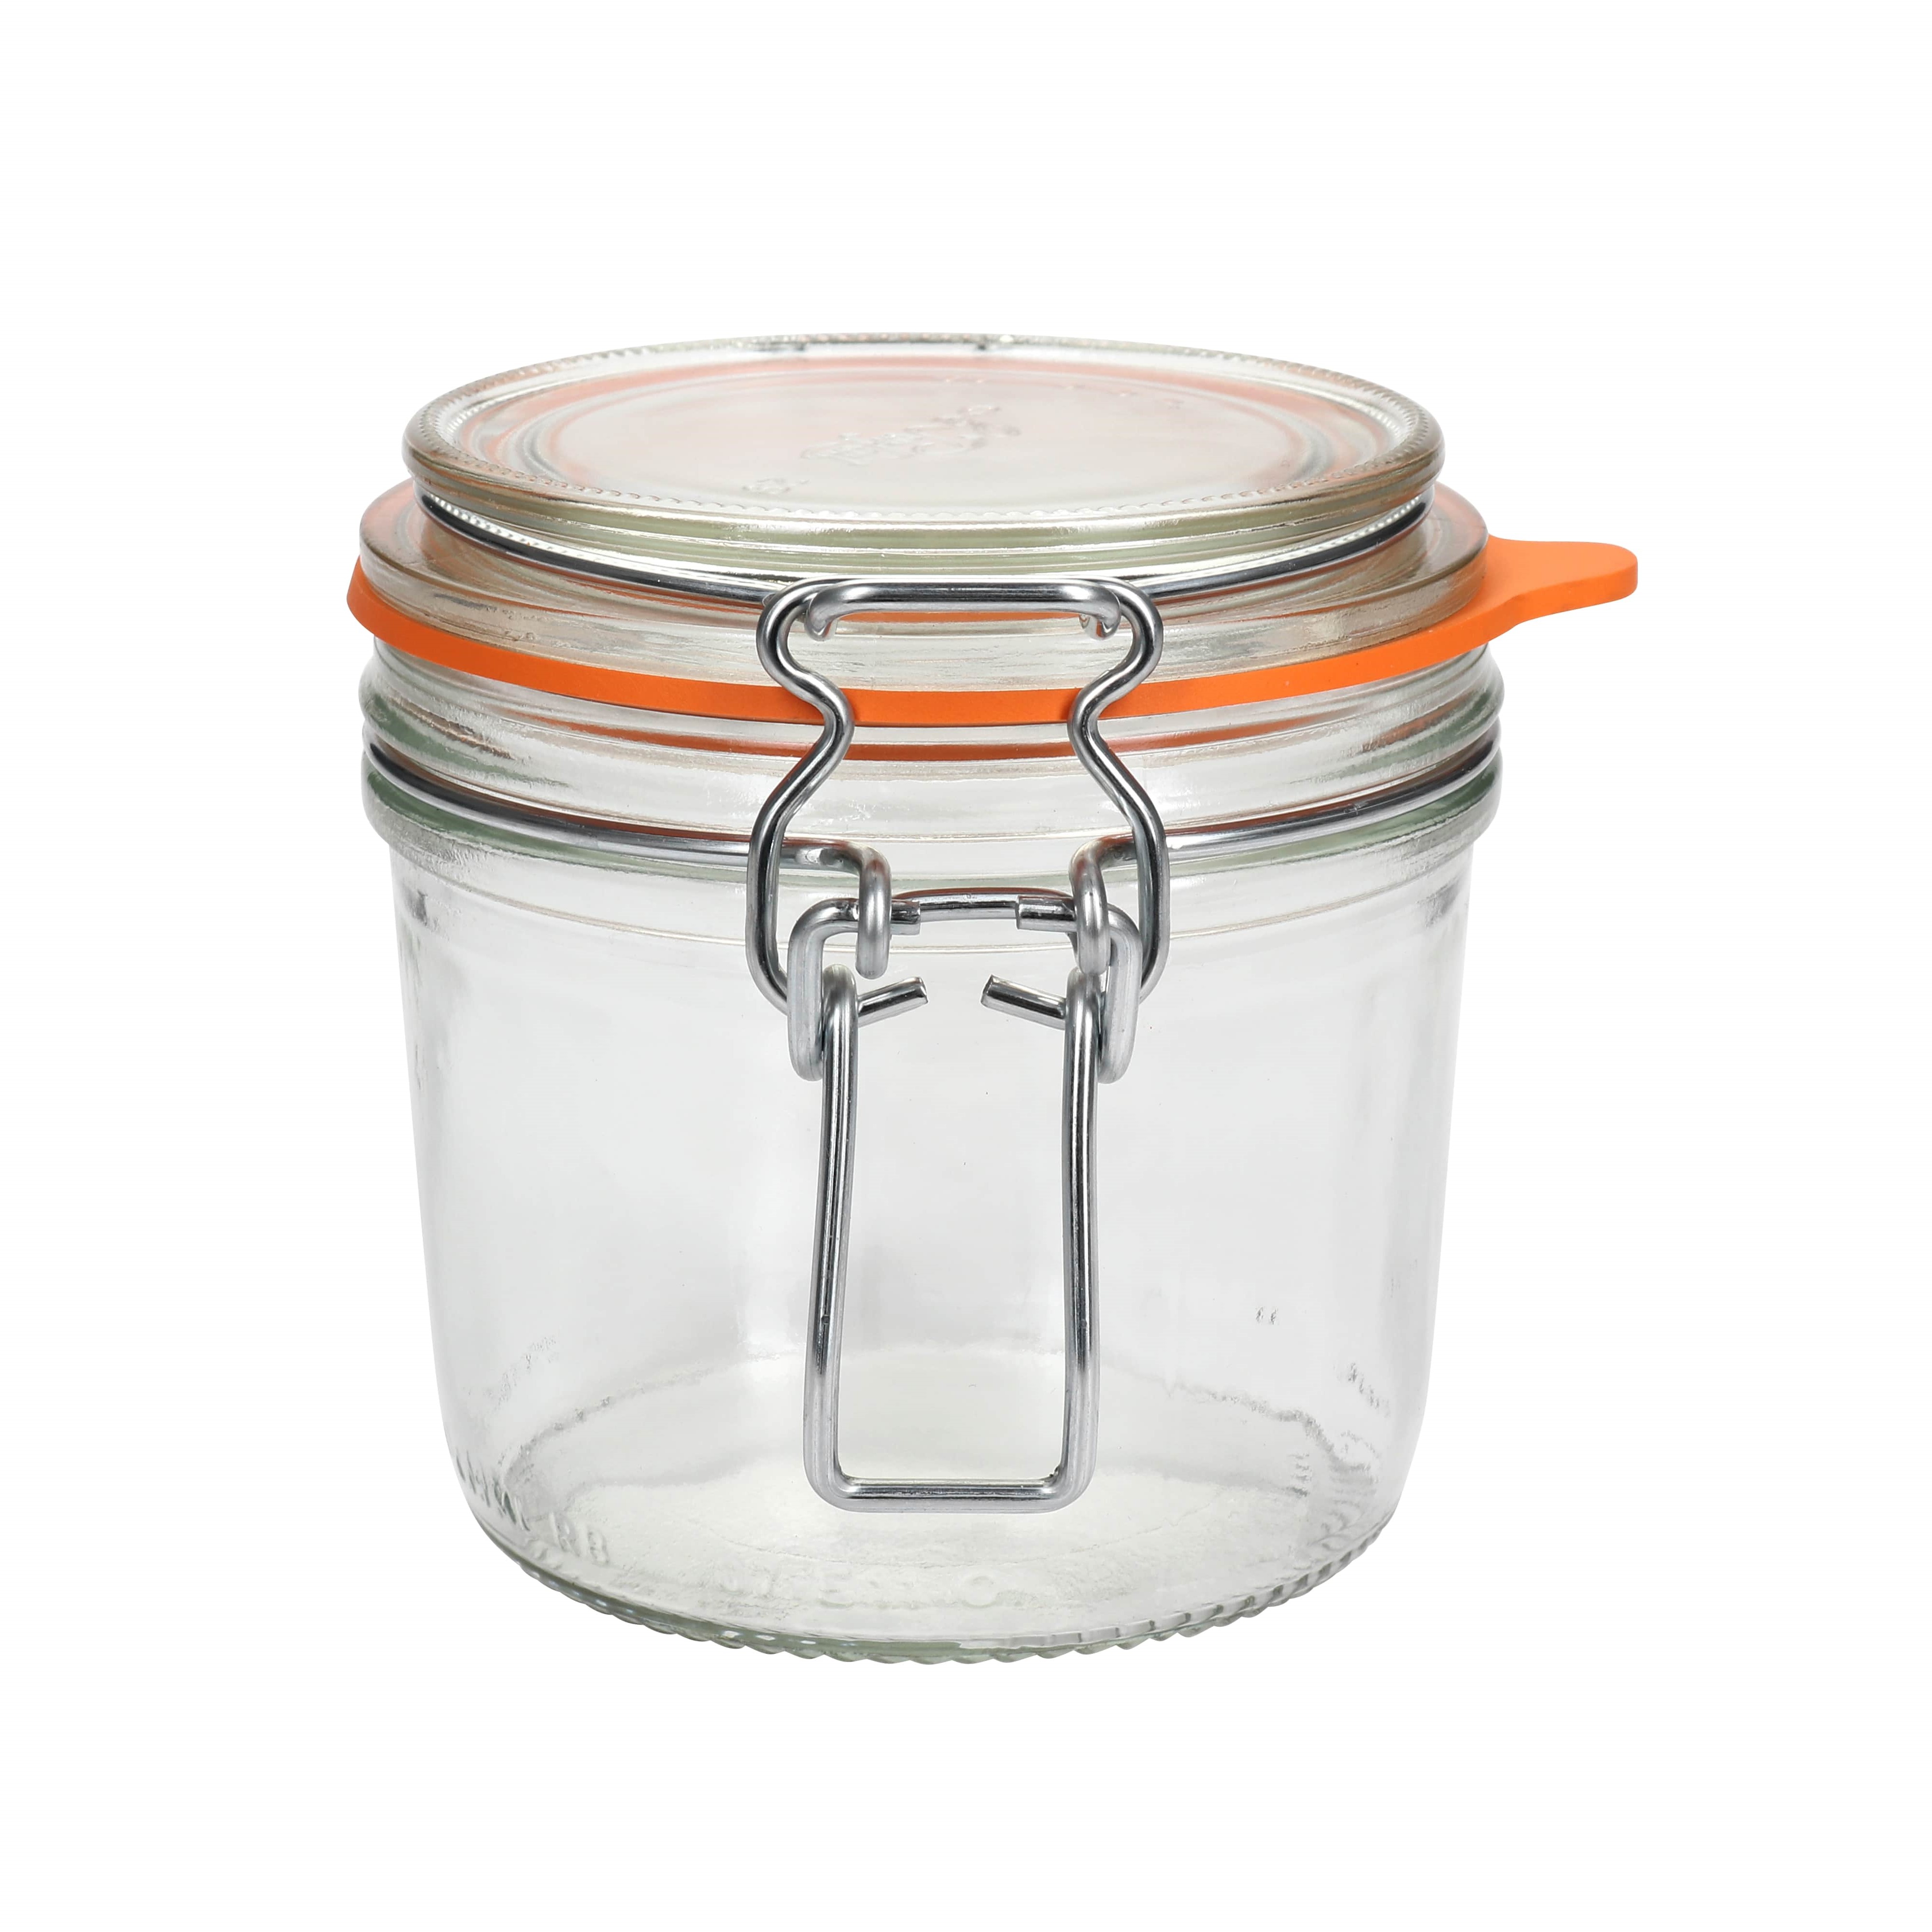 350 ml clip top jar 'Le Parfait Super Terrine', closure: clip top